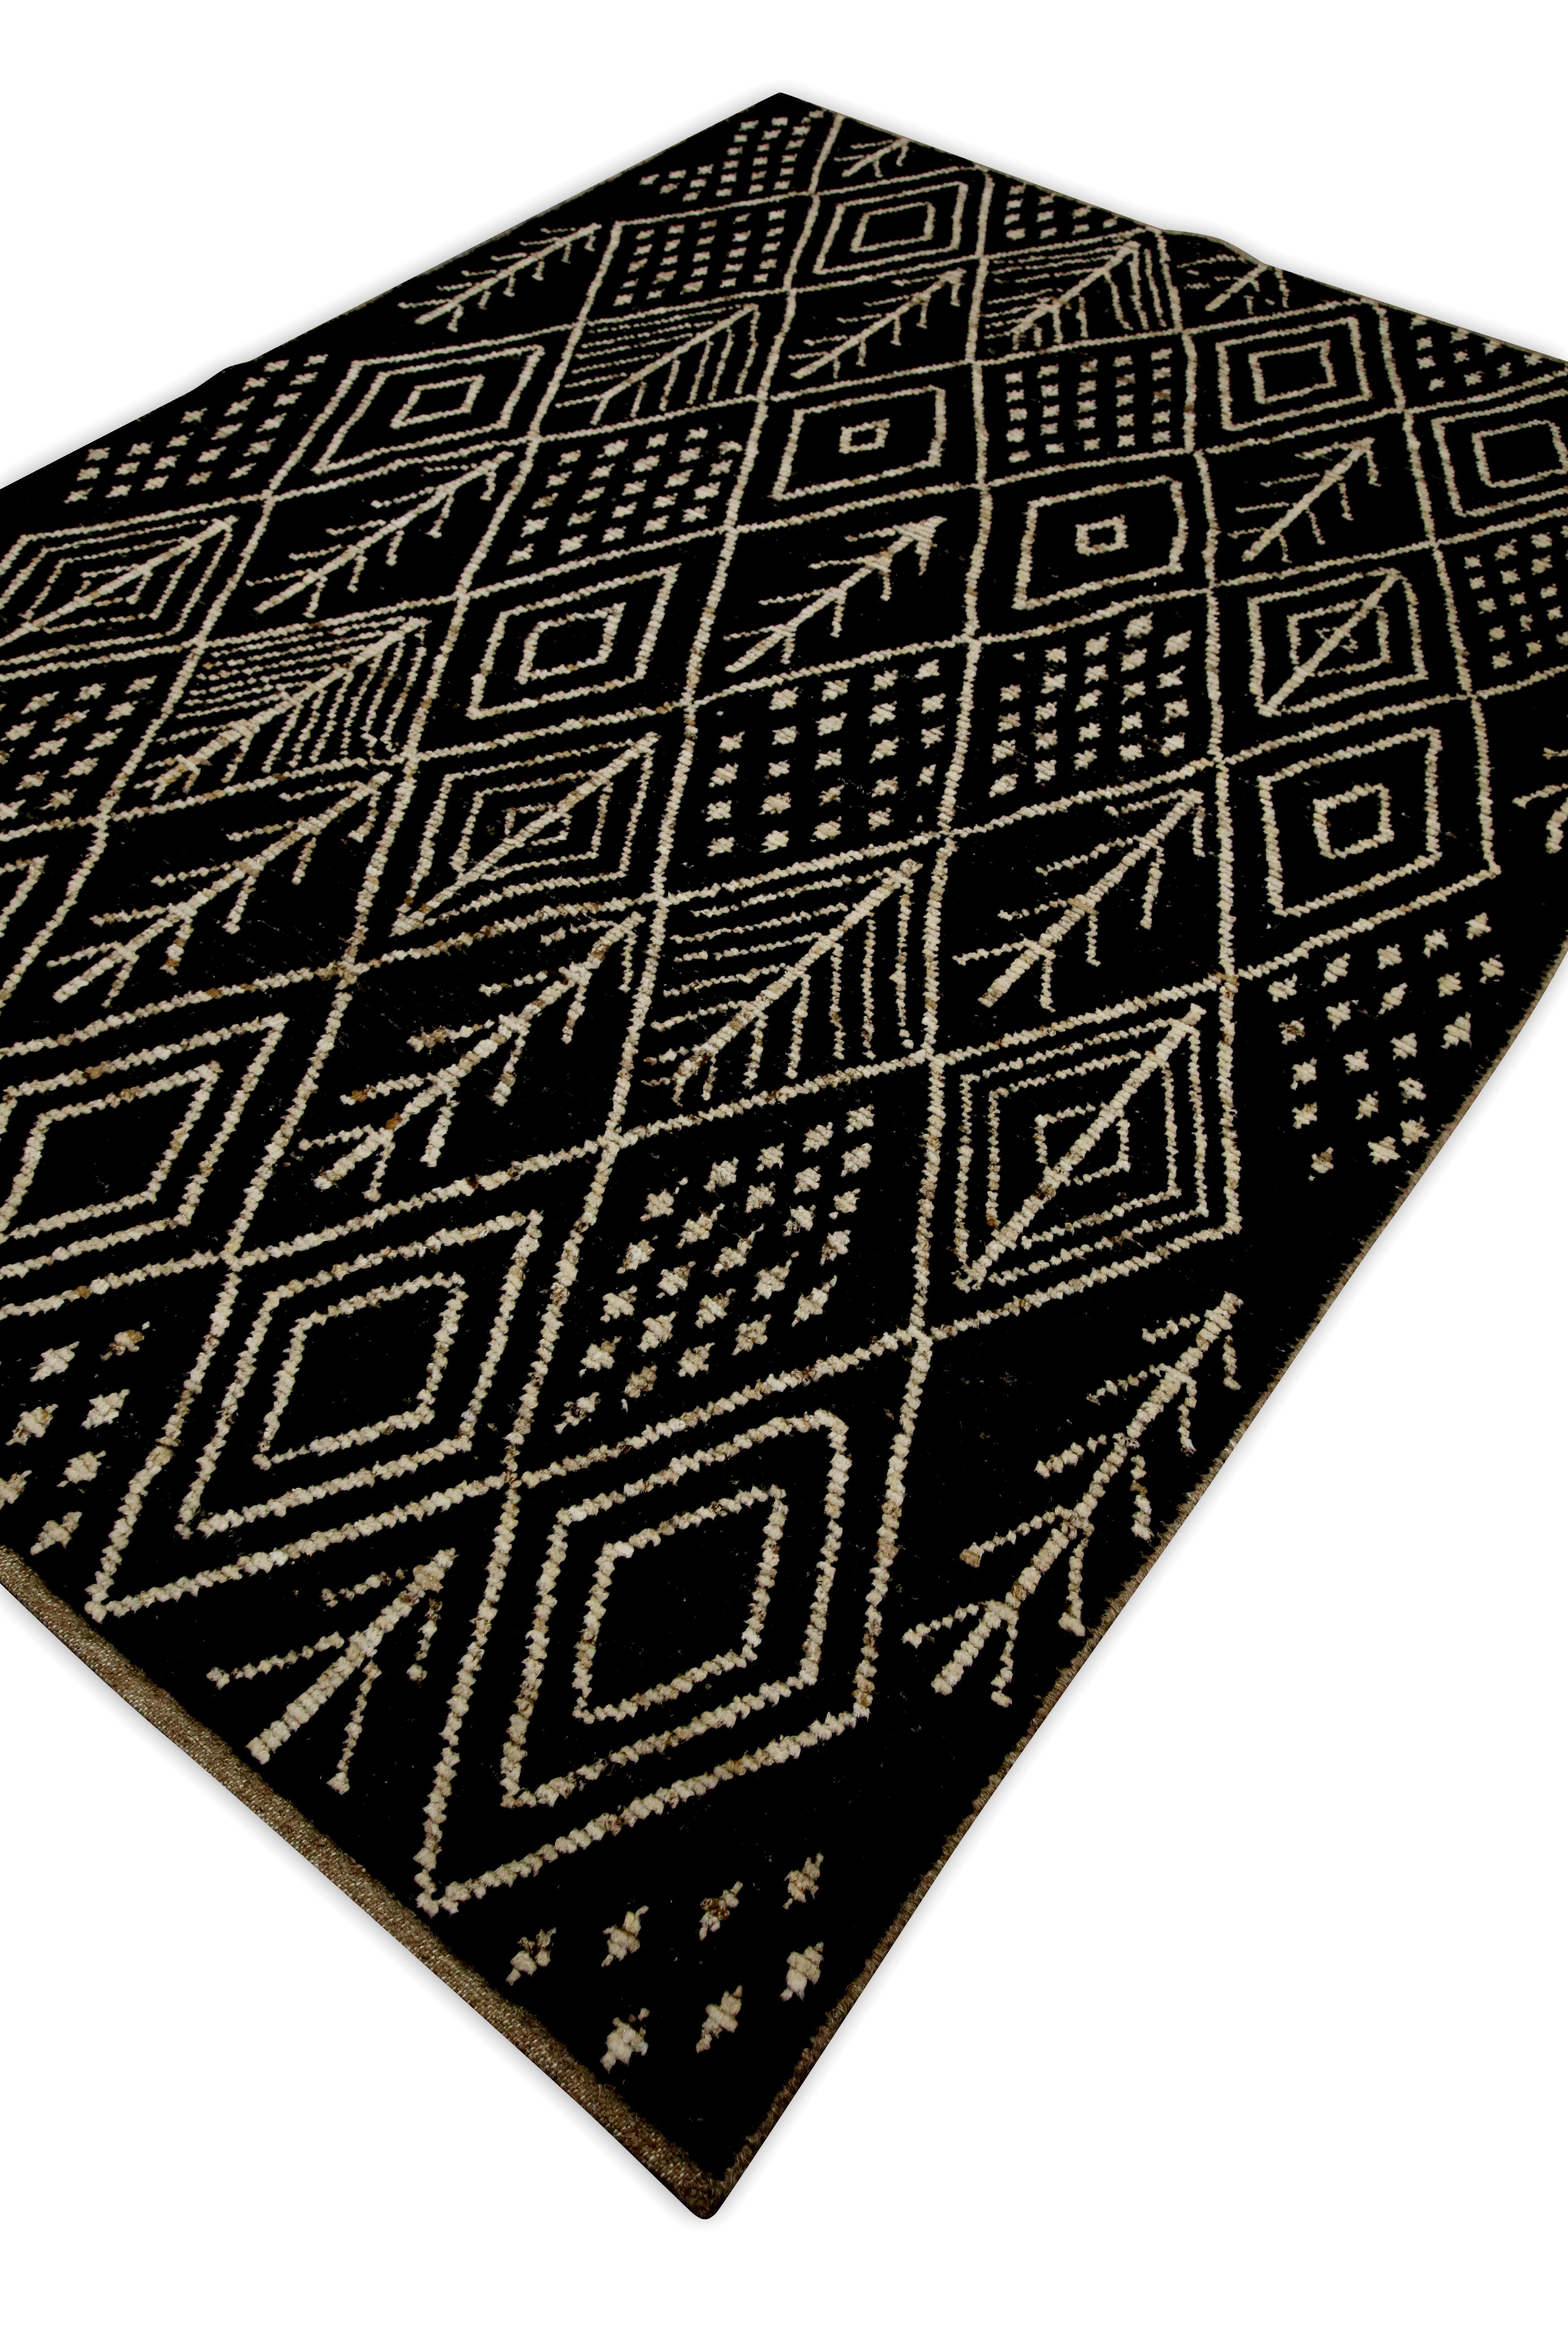 Contemporary Black & White Handmade Wool Modern Turkish Rug in Geometric Design 6'3